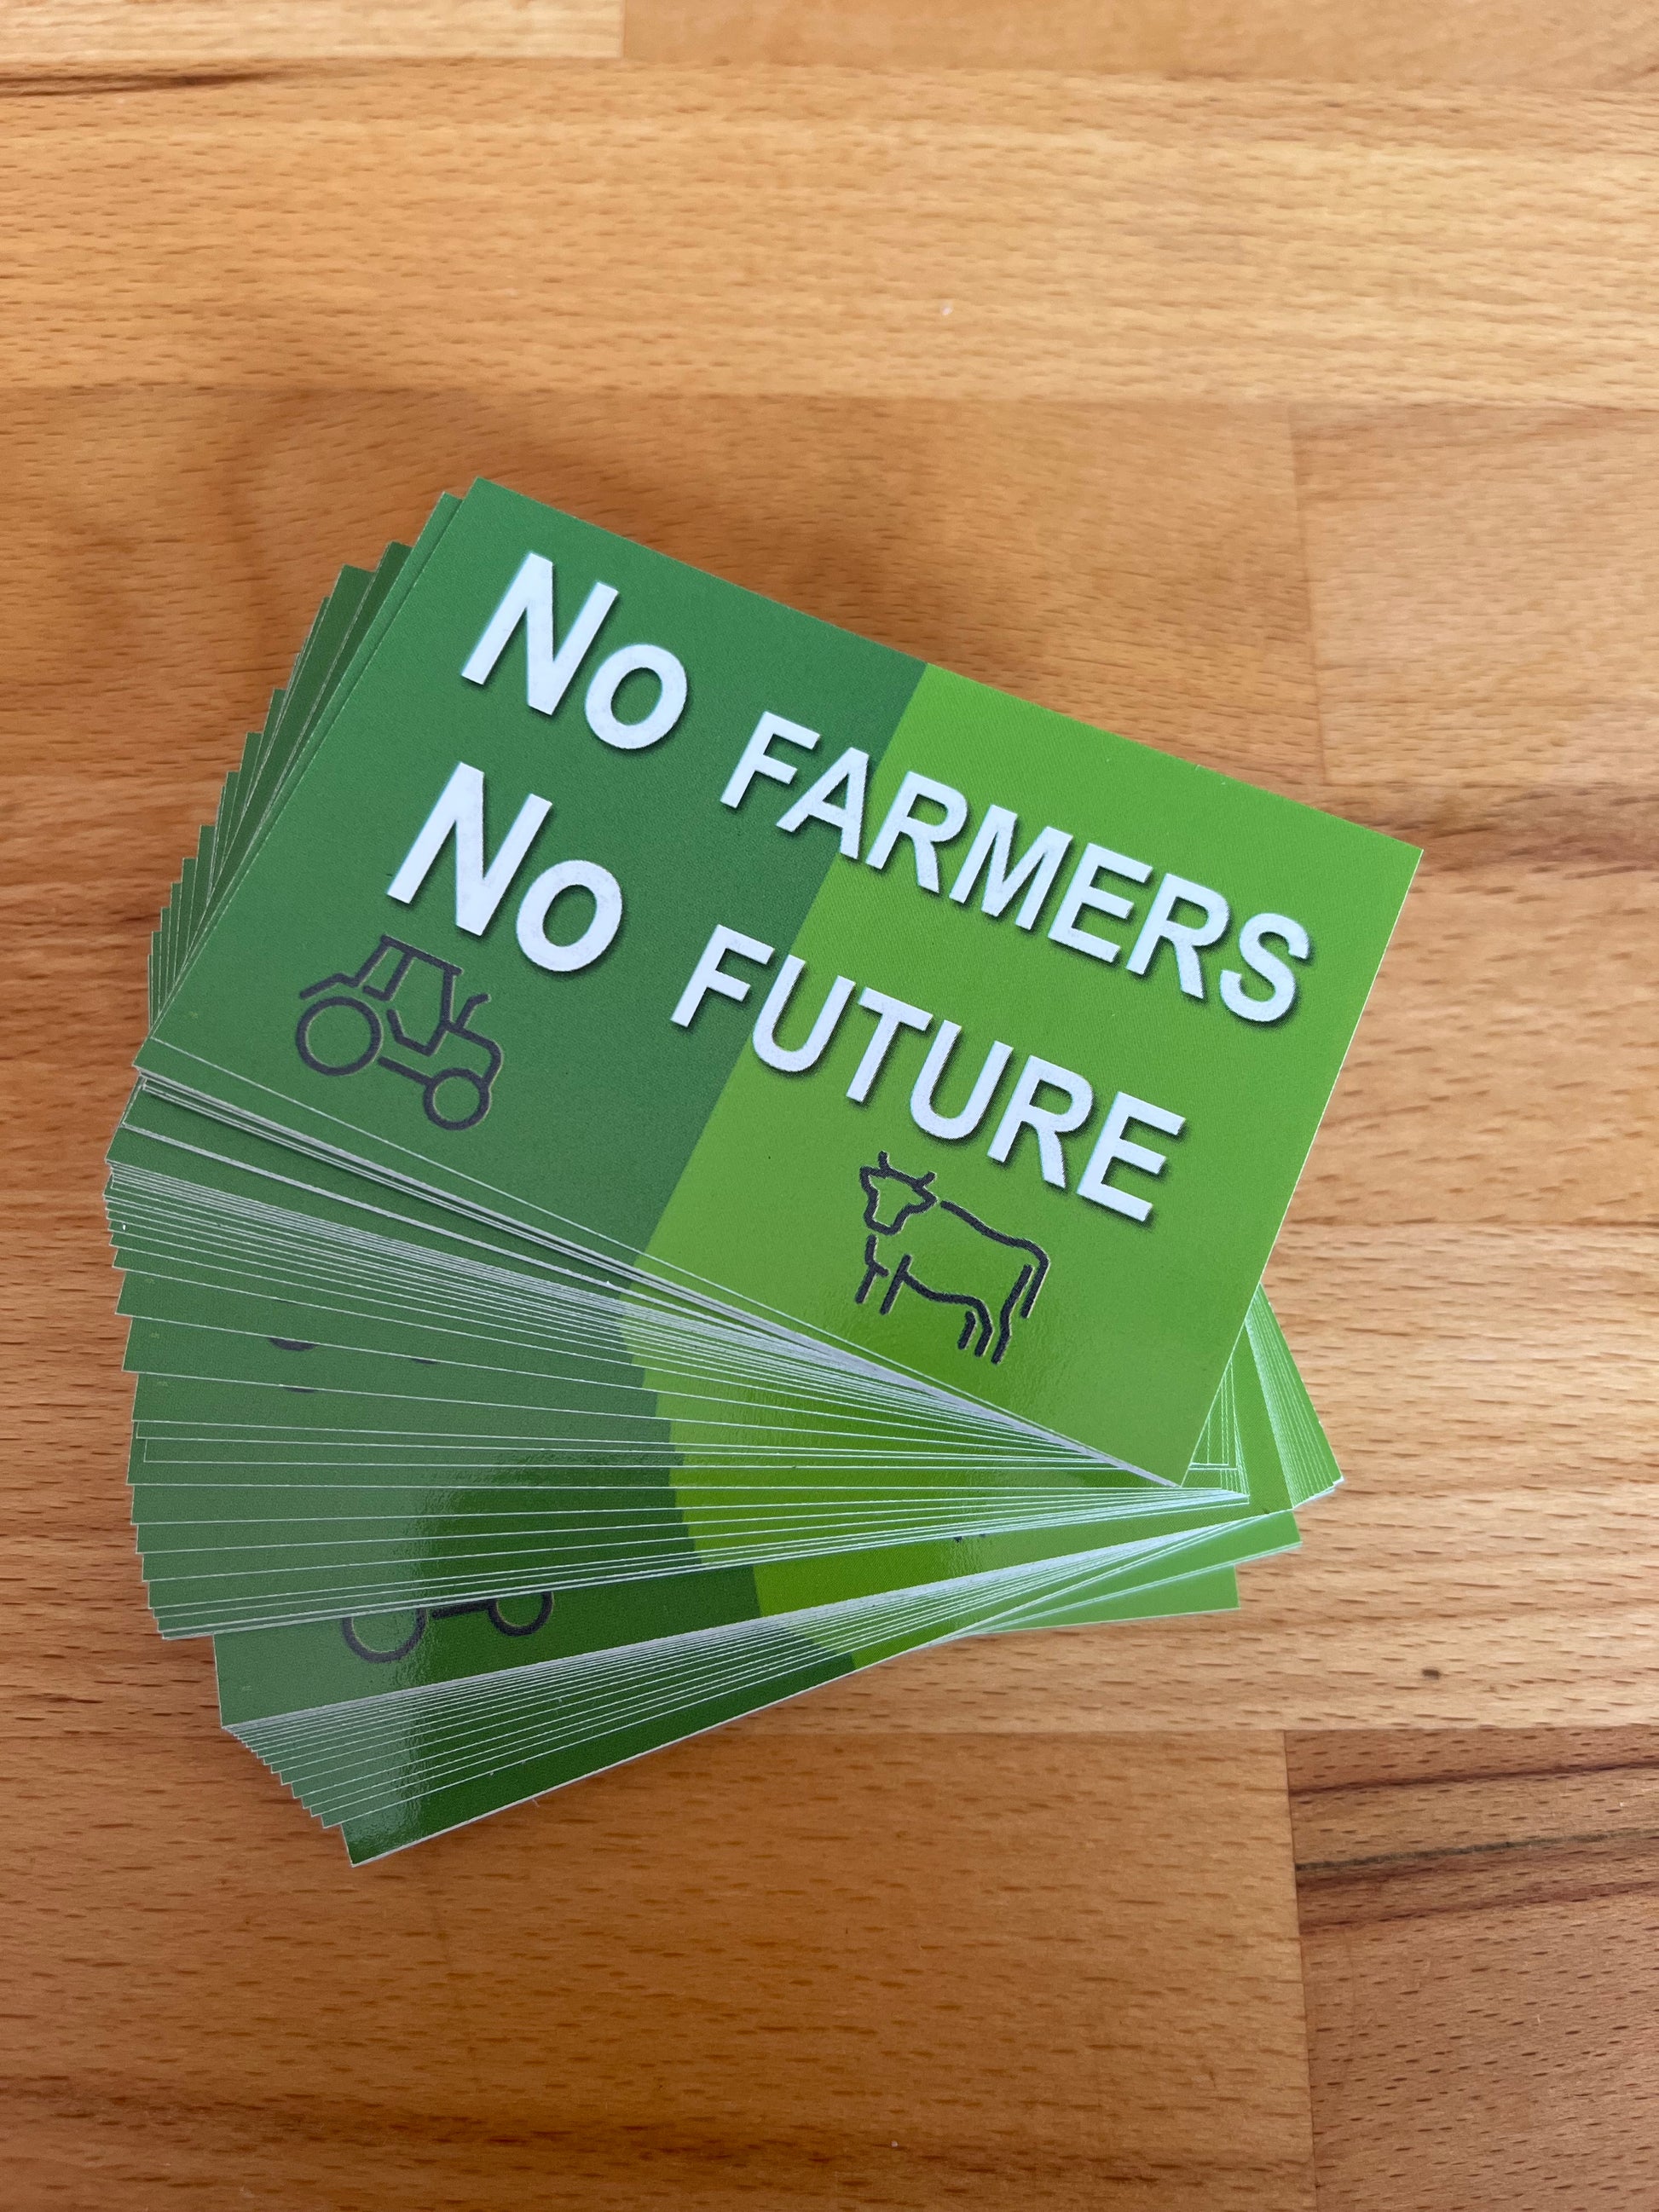 Autocollant  Farmers-For-Future